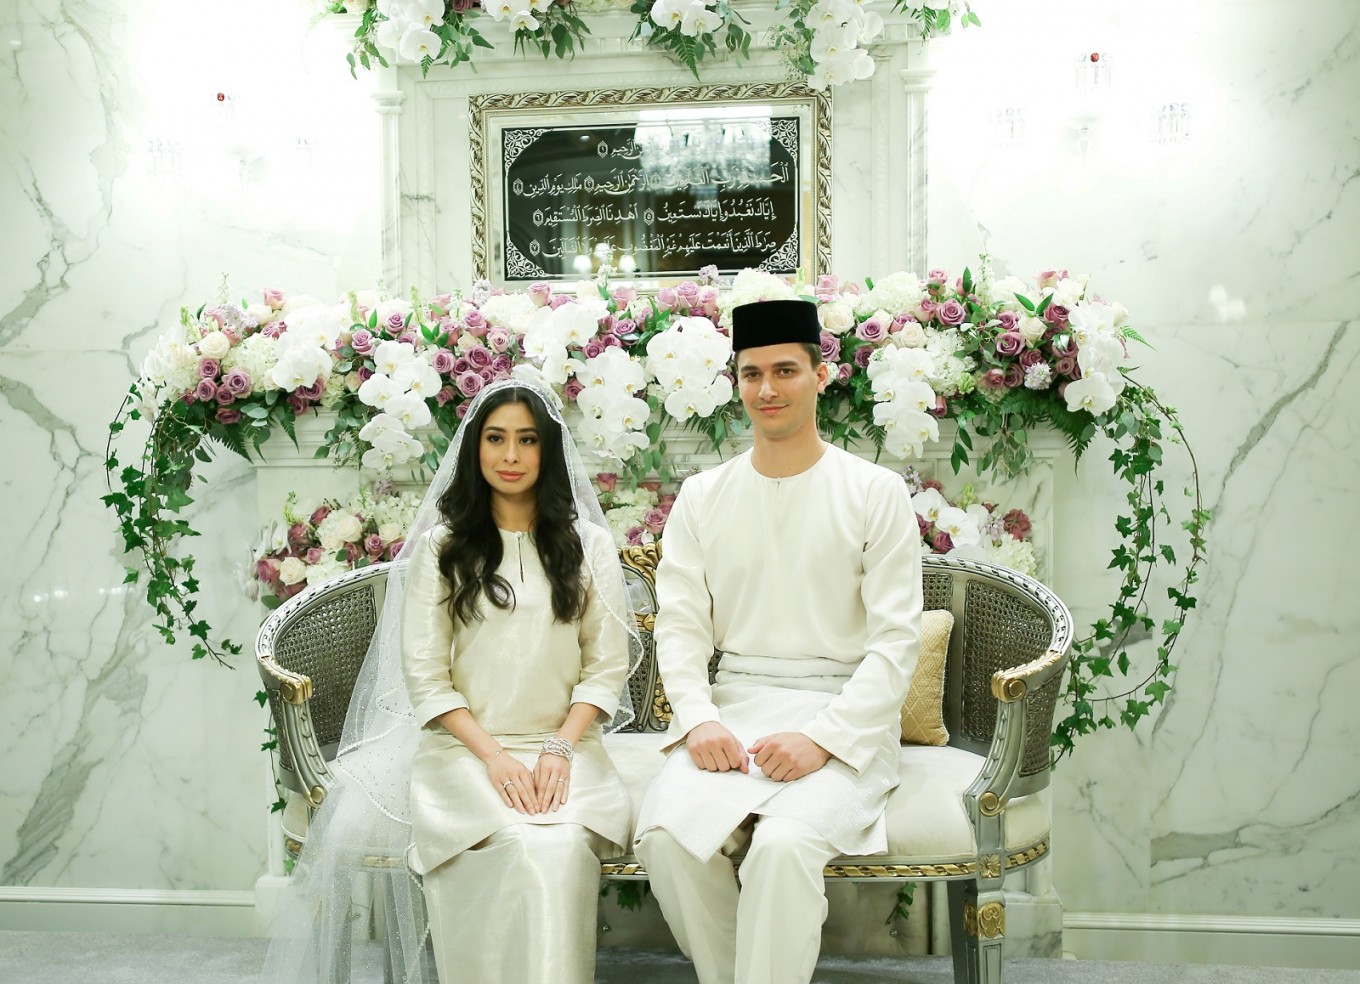 Malaysian princess marries Dutchman in lavish ceremony 